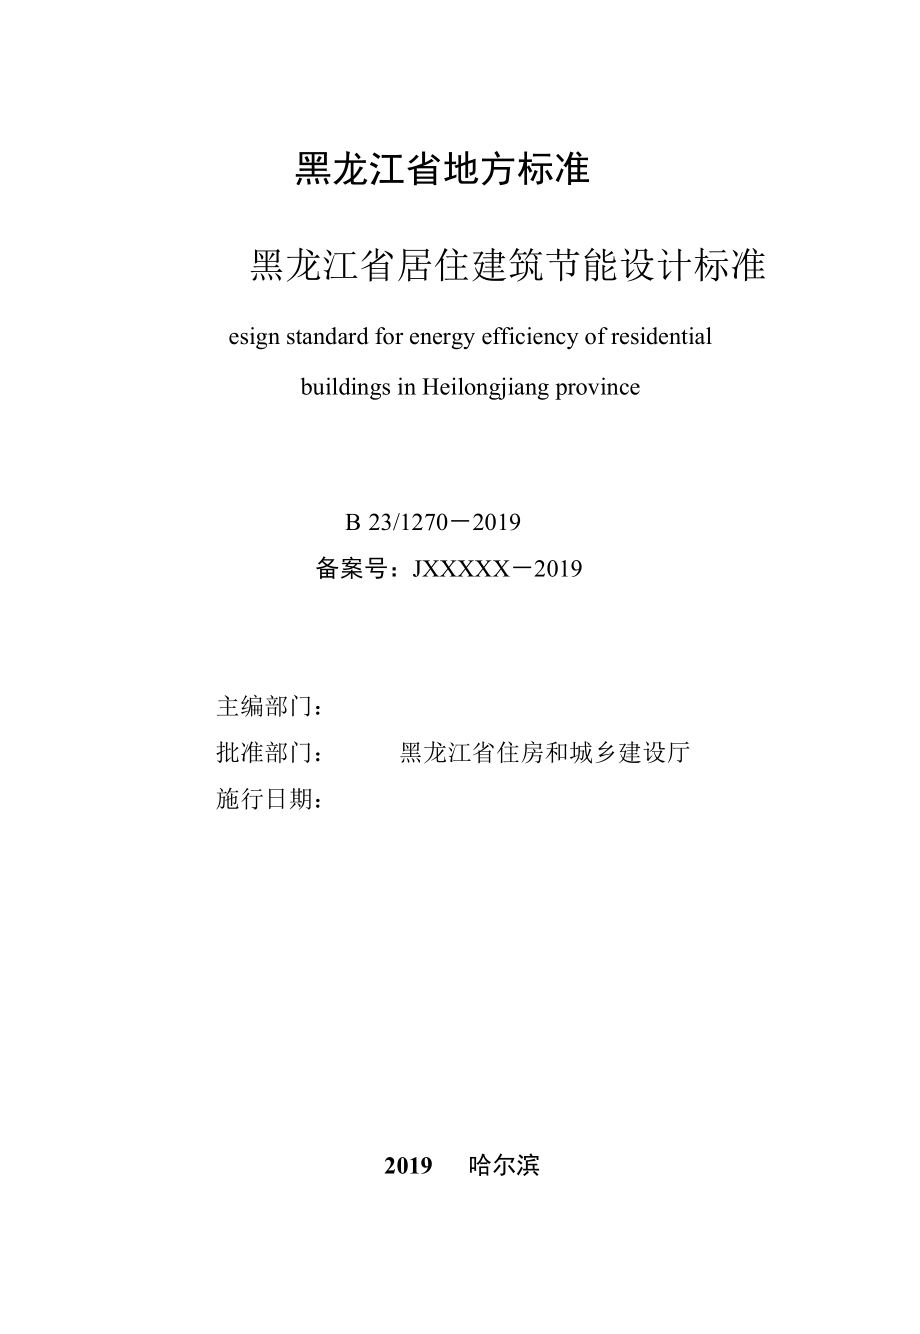 DB 231270－2019黑龙江省居住建筑节能设计标准.pdf-2020-08-31-23-03-24-290_第2页